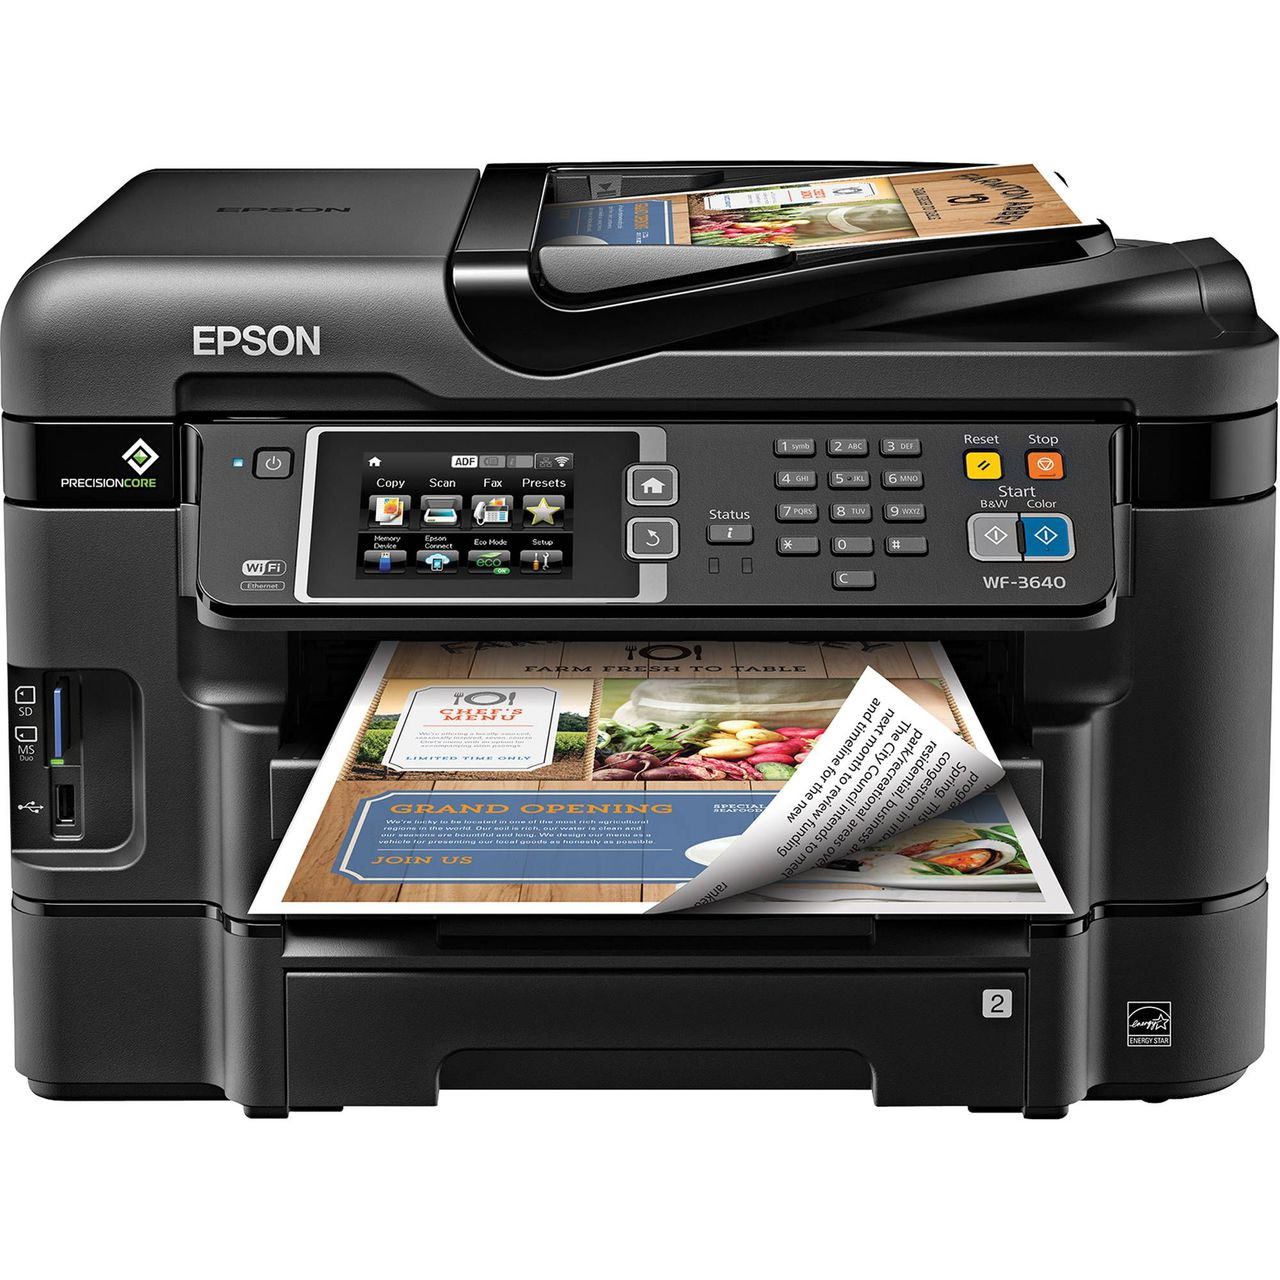 Epson Workforce 3640 Printer Troubleshooting 7483